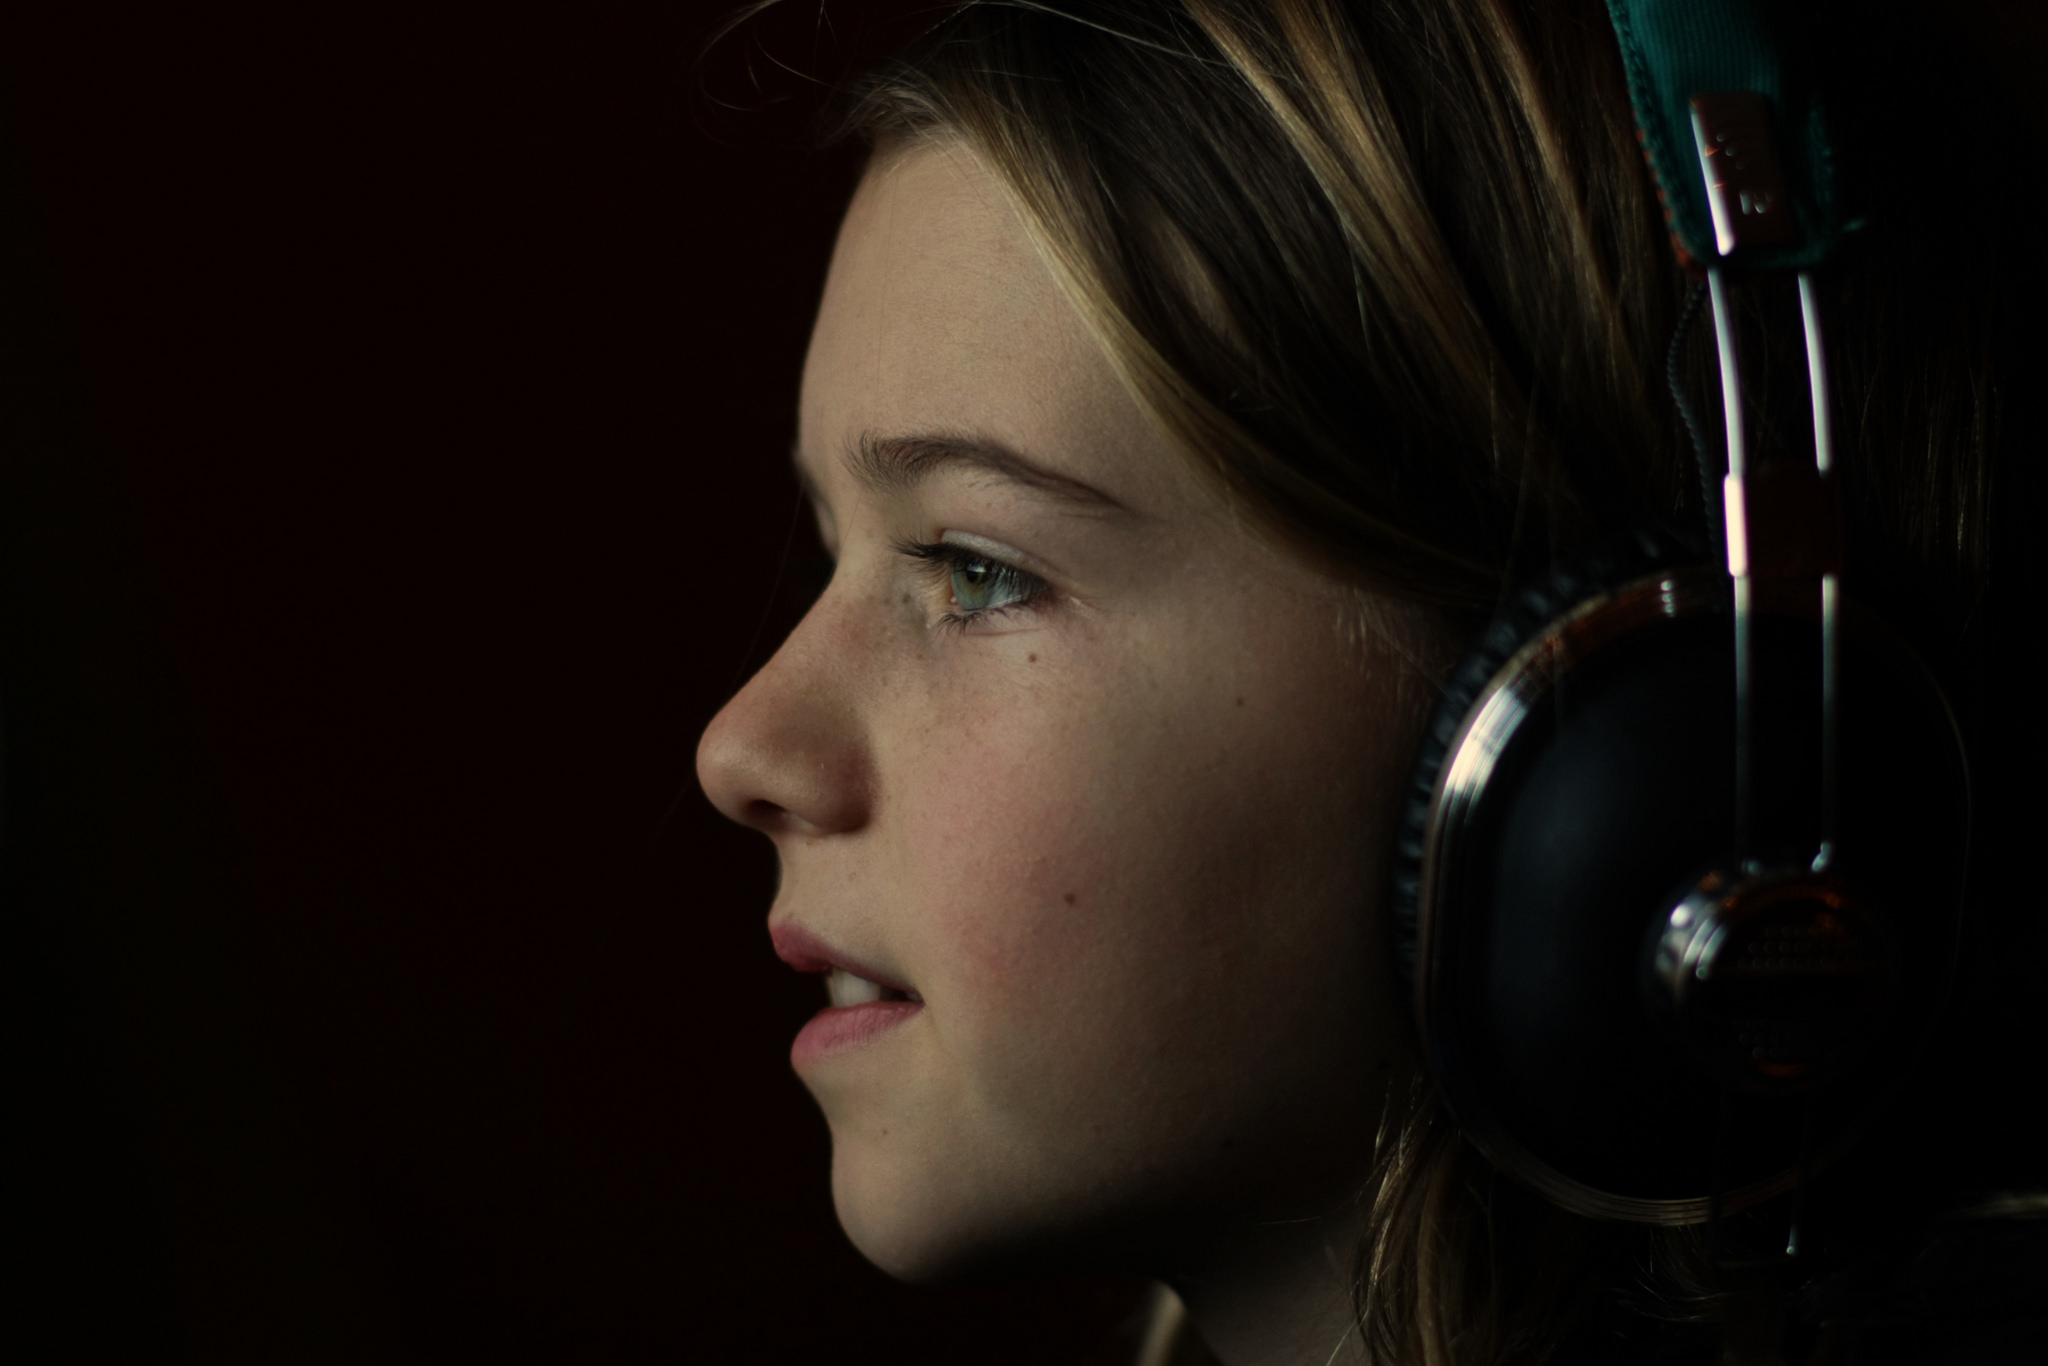 profile of girl listening to headphones